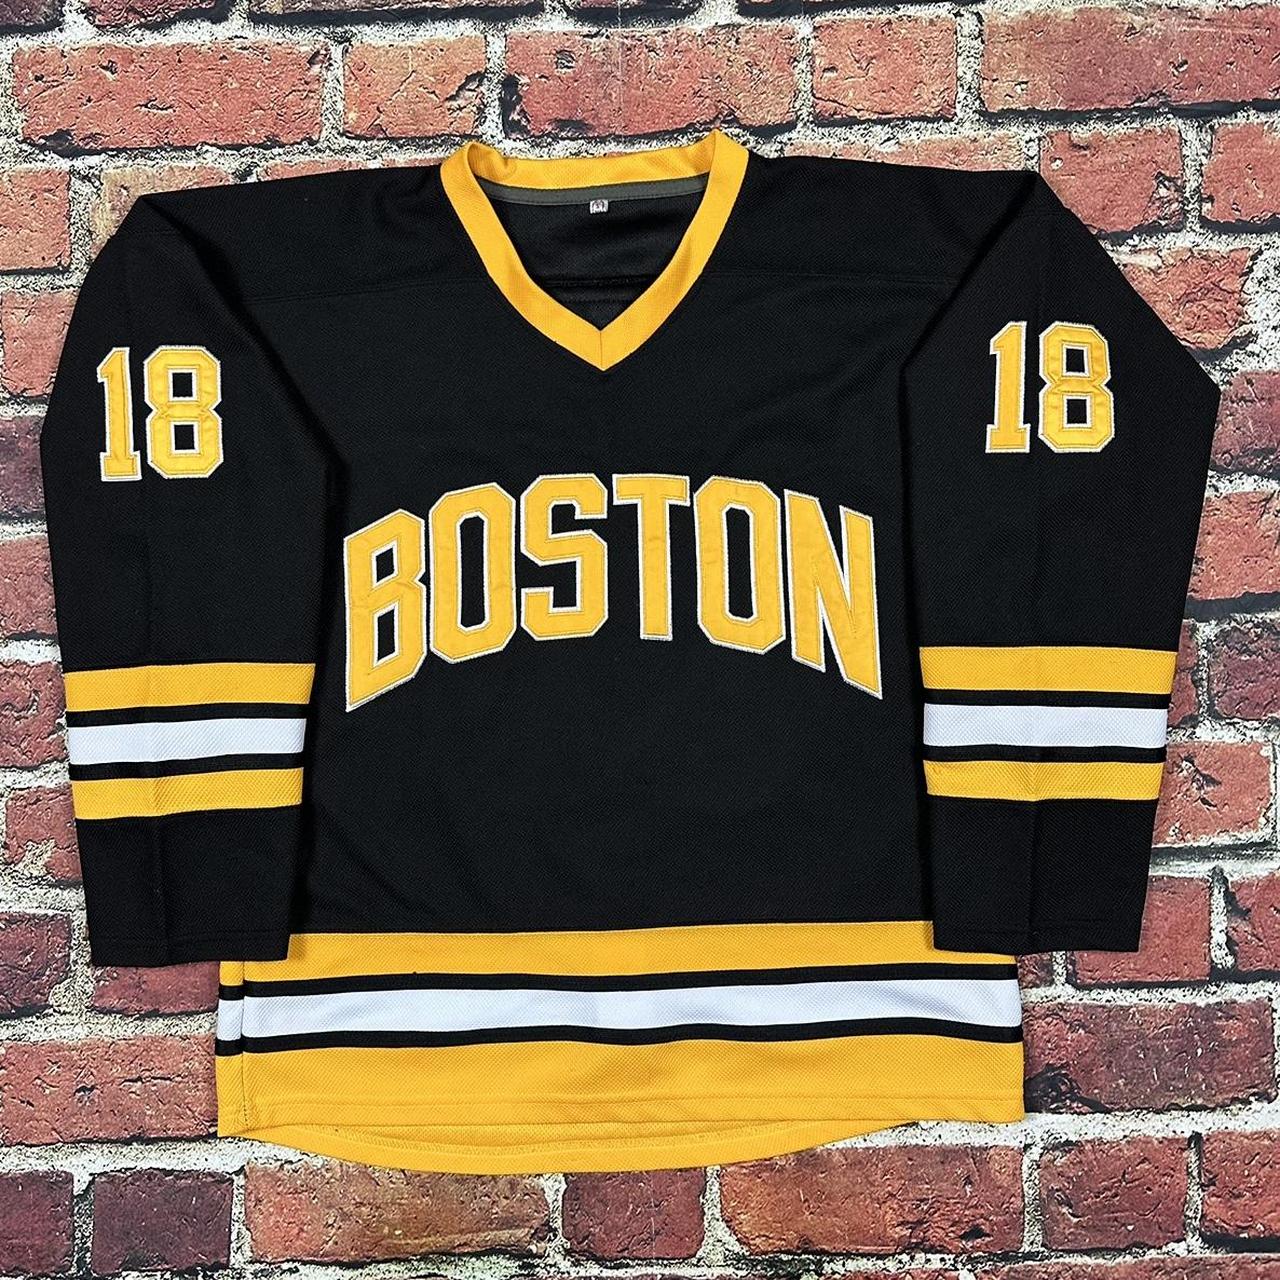 Boston Bruins Happy Gilmore Jersey